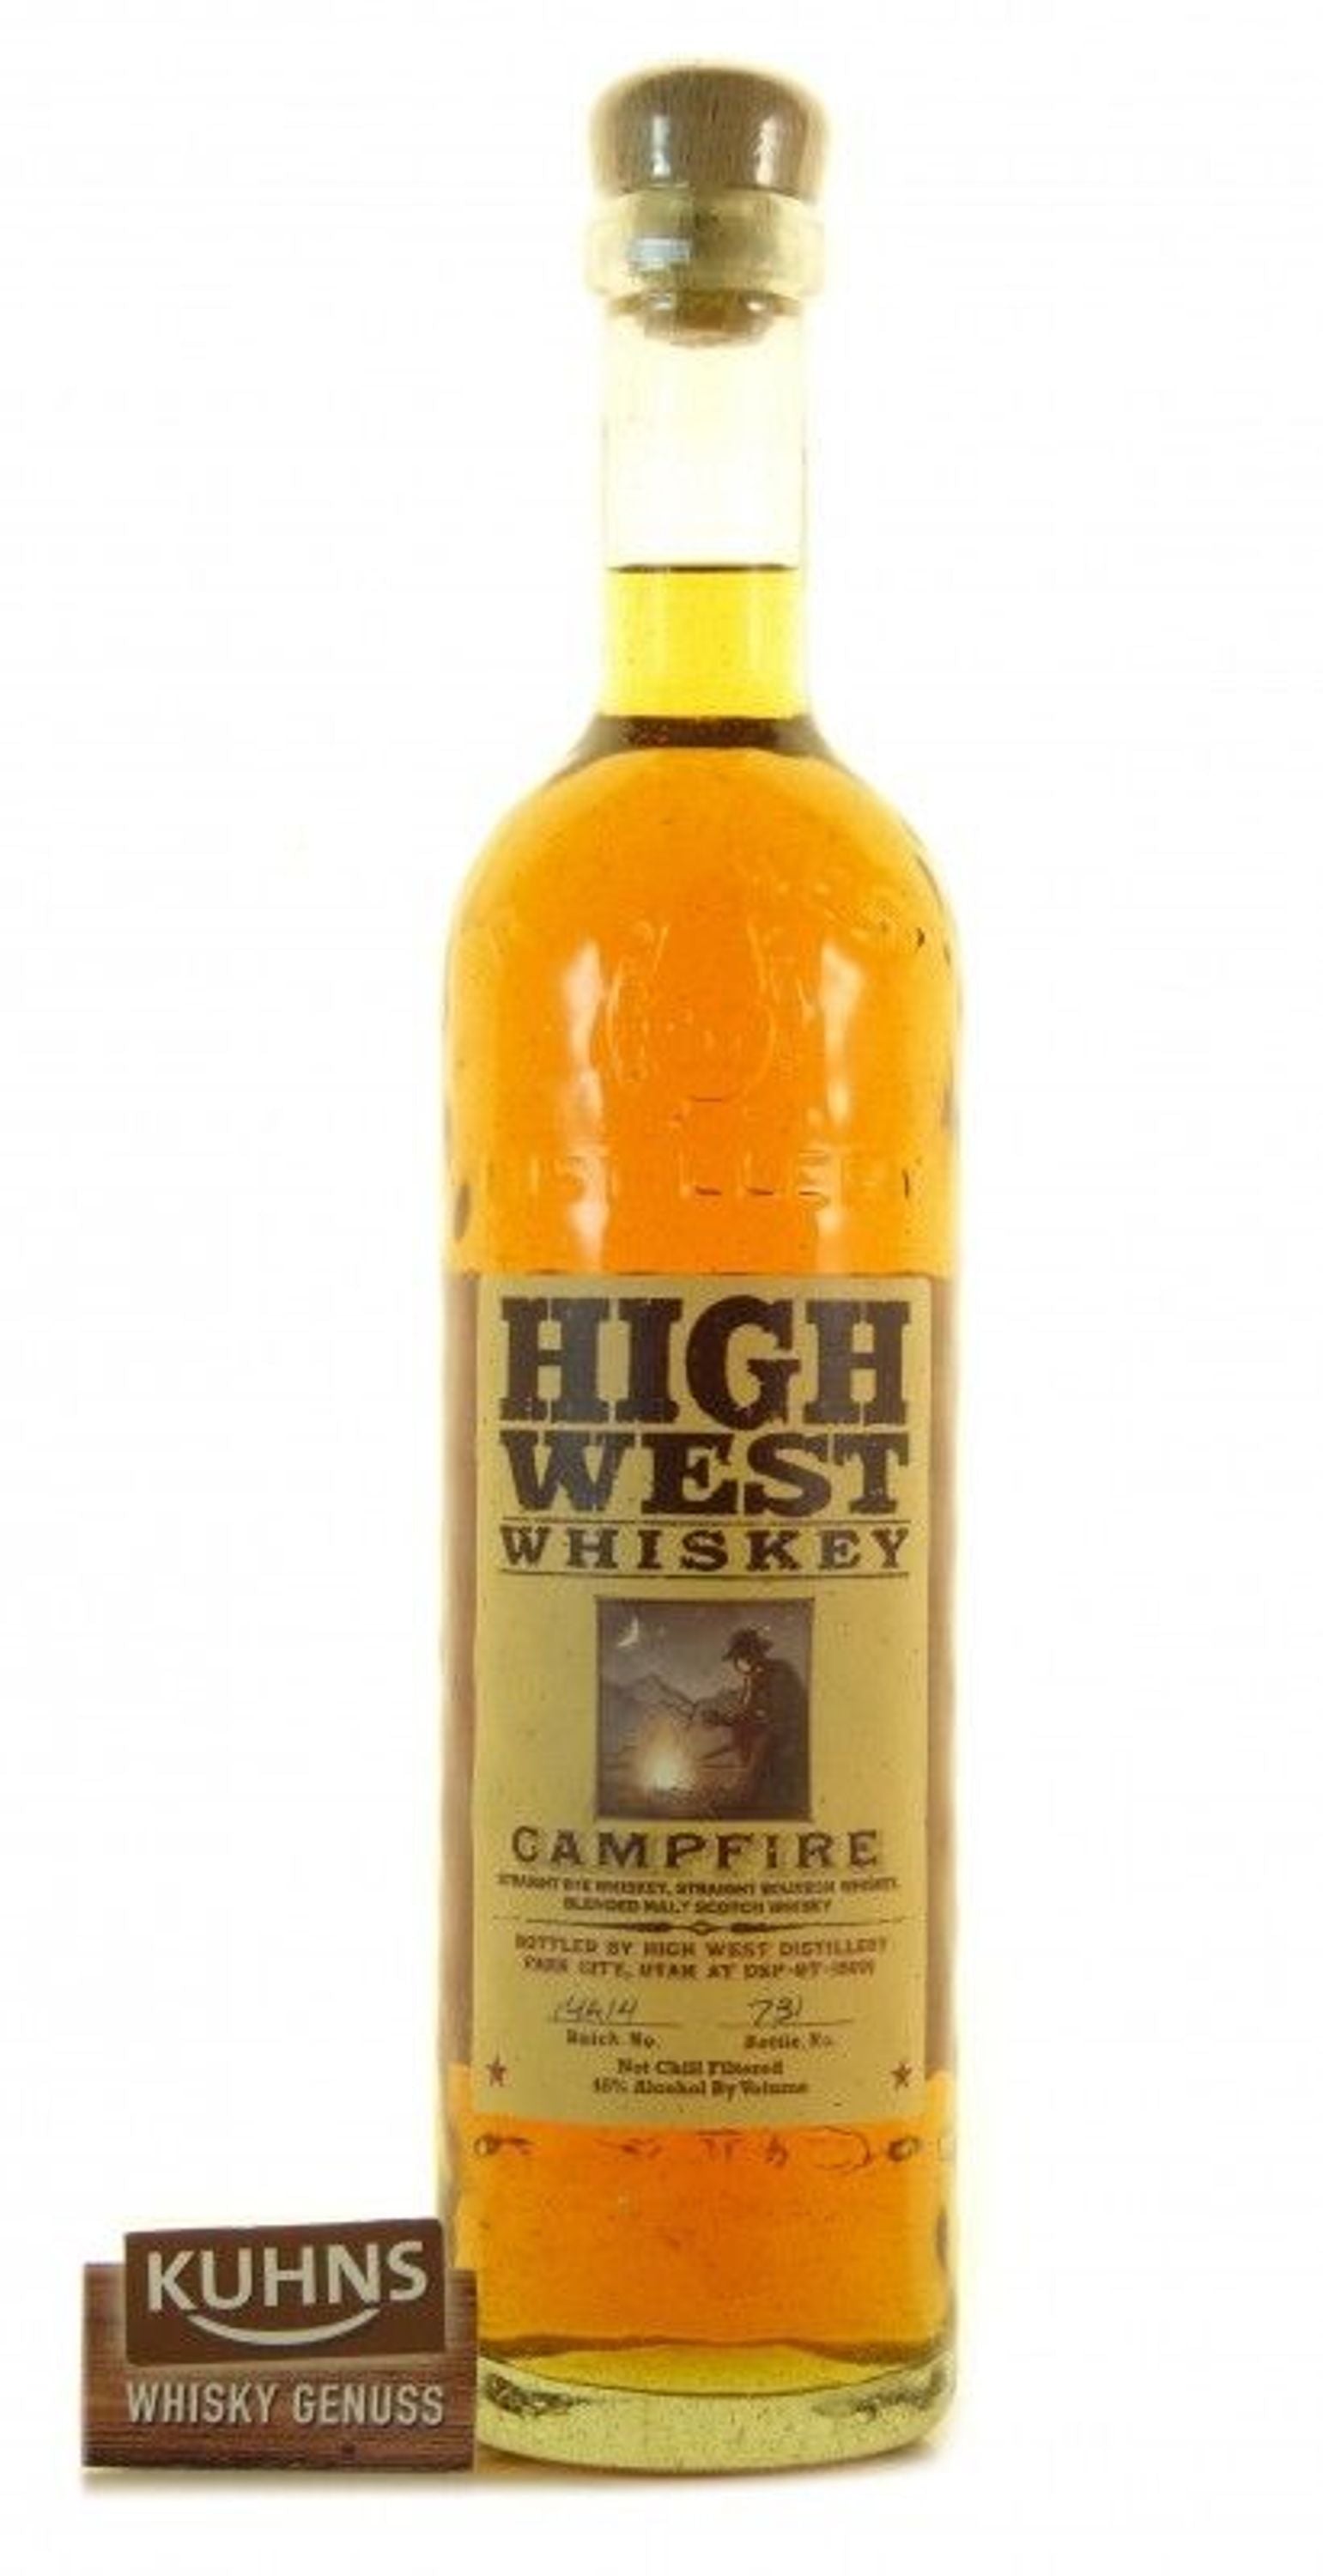 High West Campfire Whisky 0,7l, alk. 46 % ABV, USA Blended Whisky